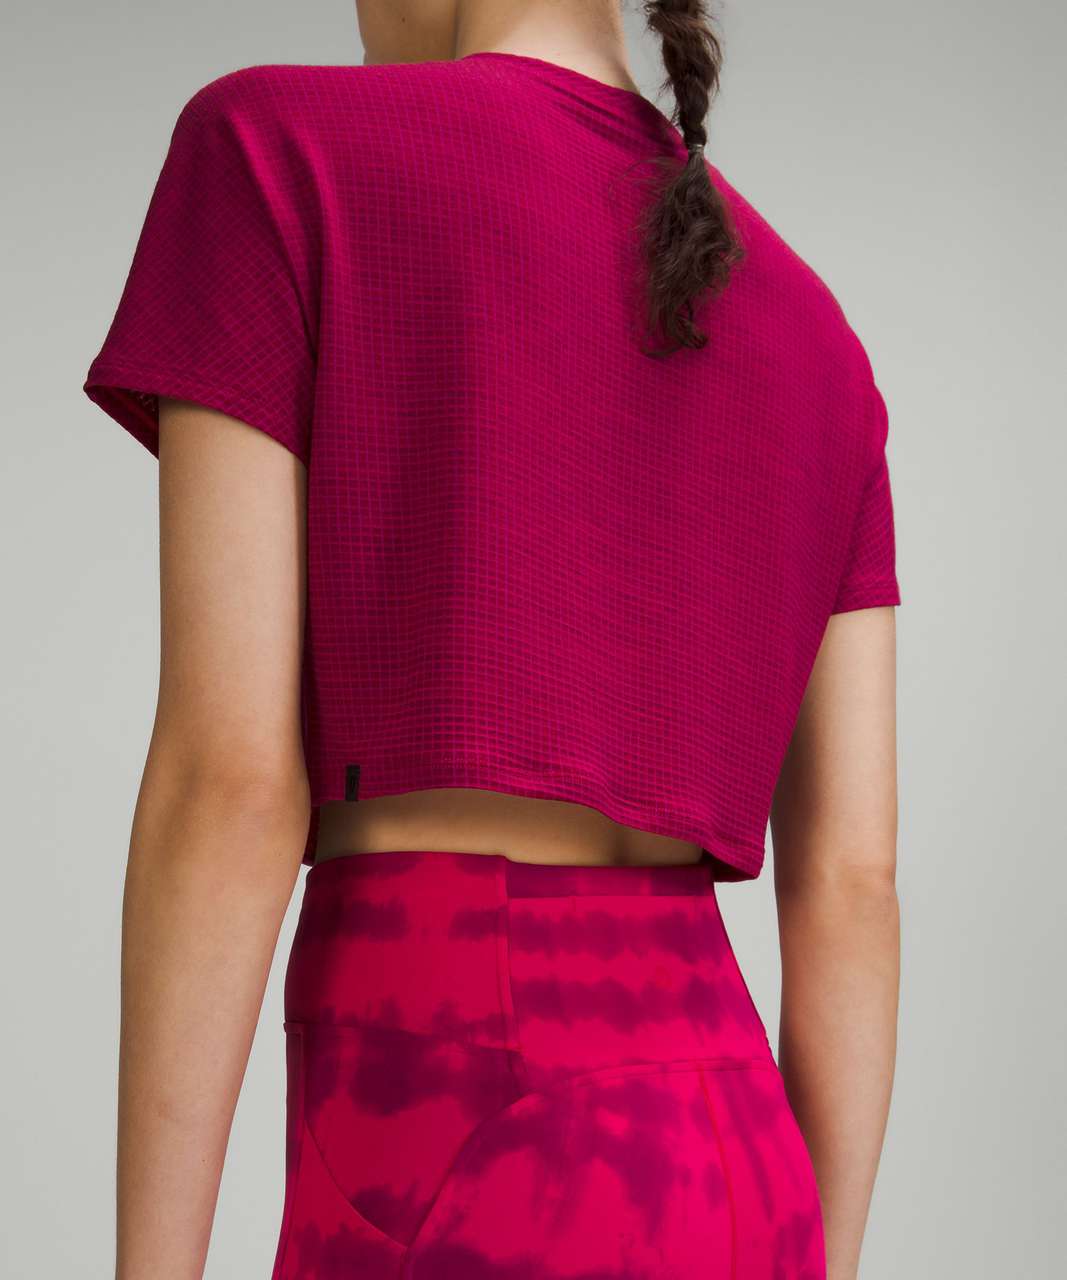 Lululemon lab Wool-Blend Cropped T-shirt - Pink Dragonfruit / Wild Berry